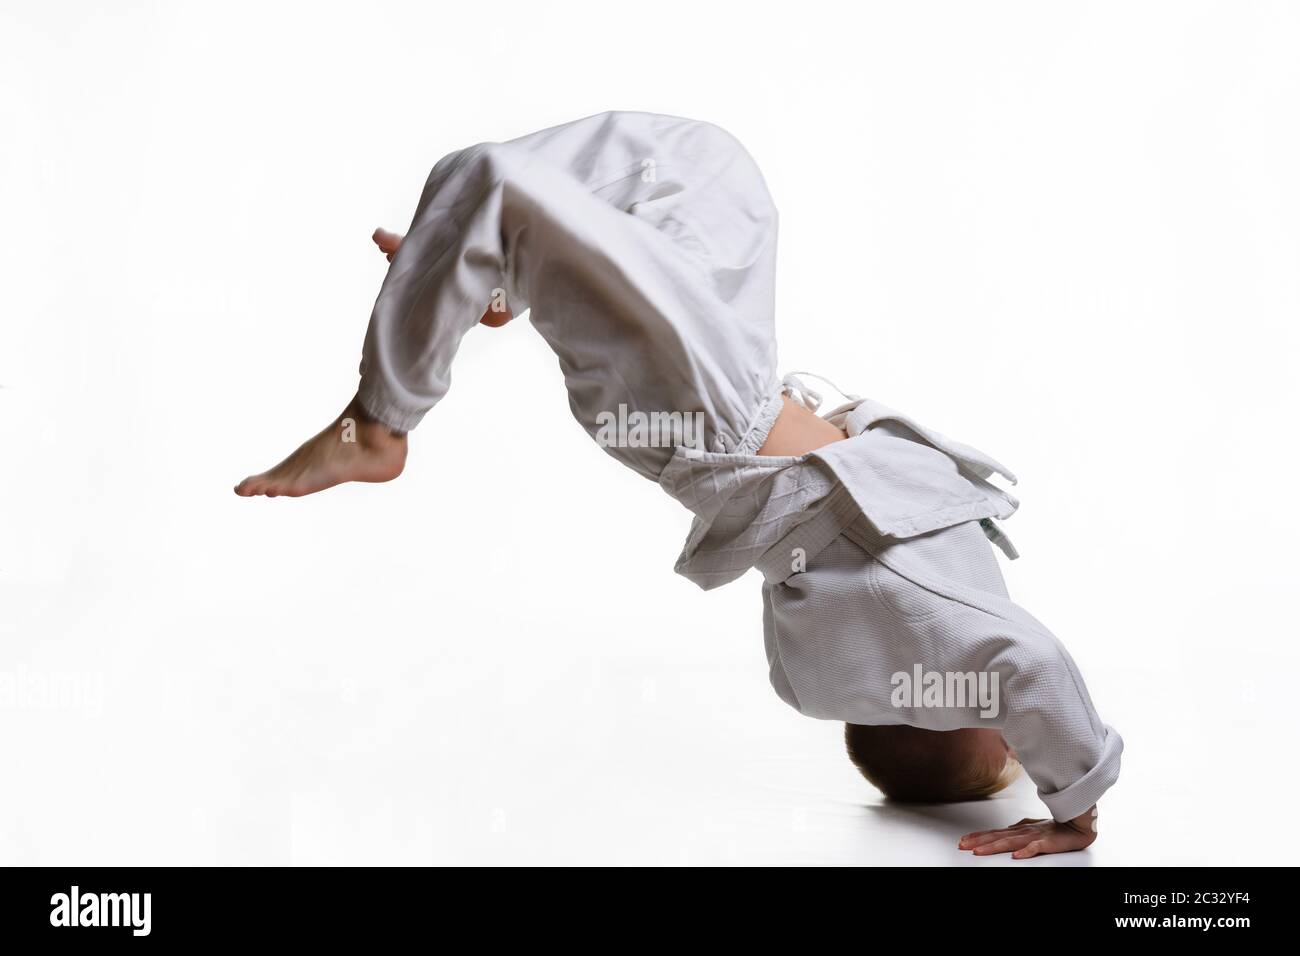 Judo boy in white kimono doing somersault Stock Photo